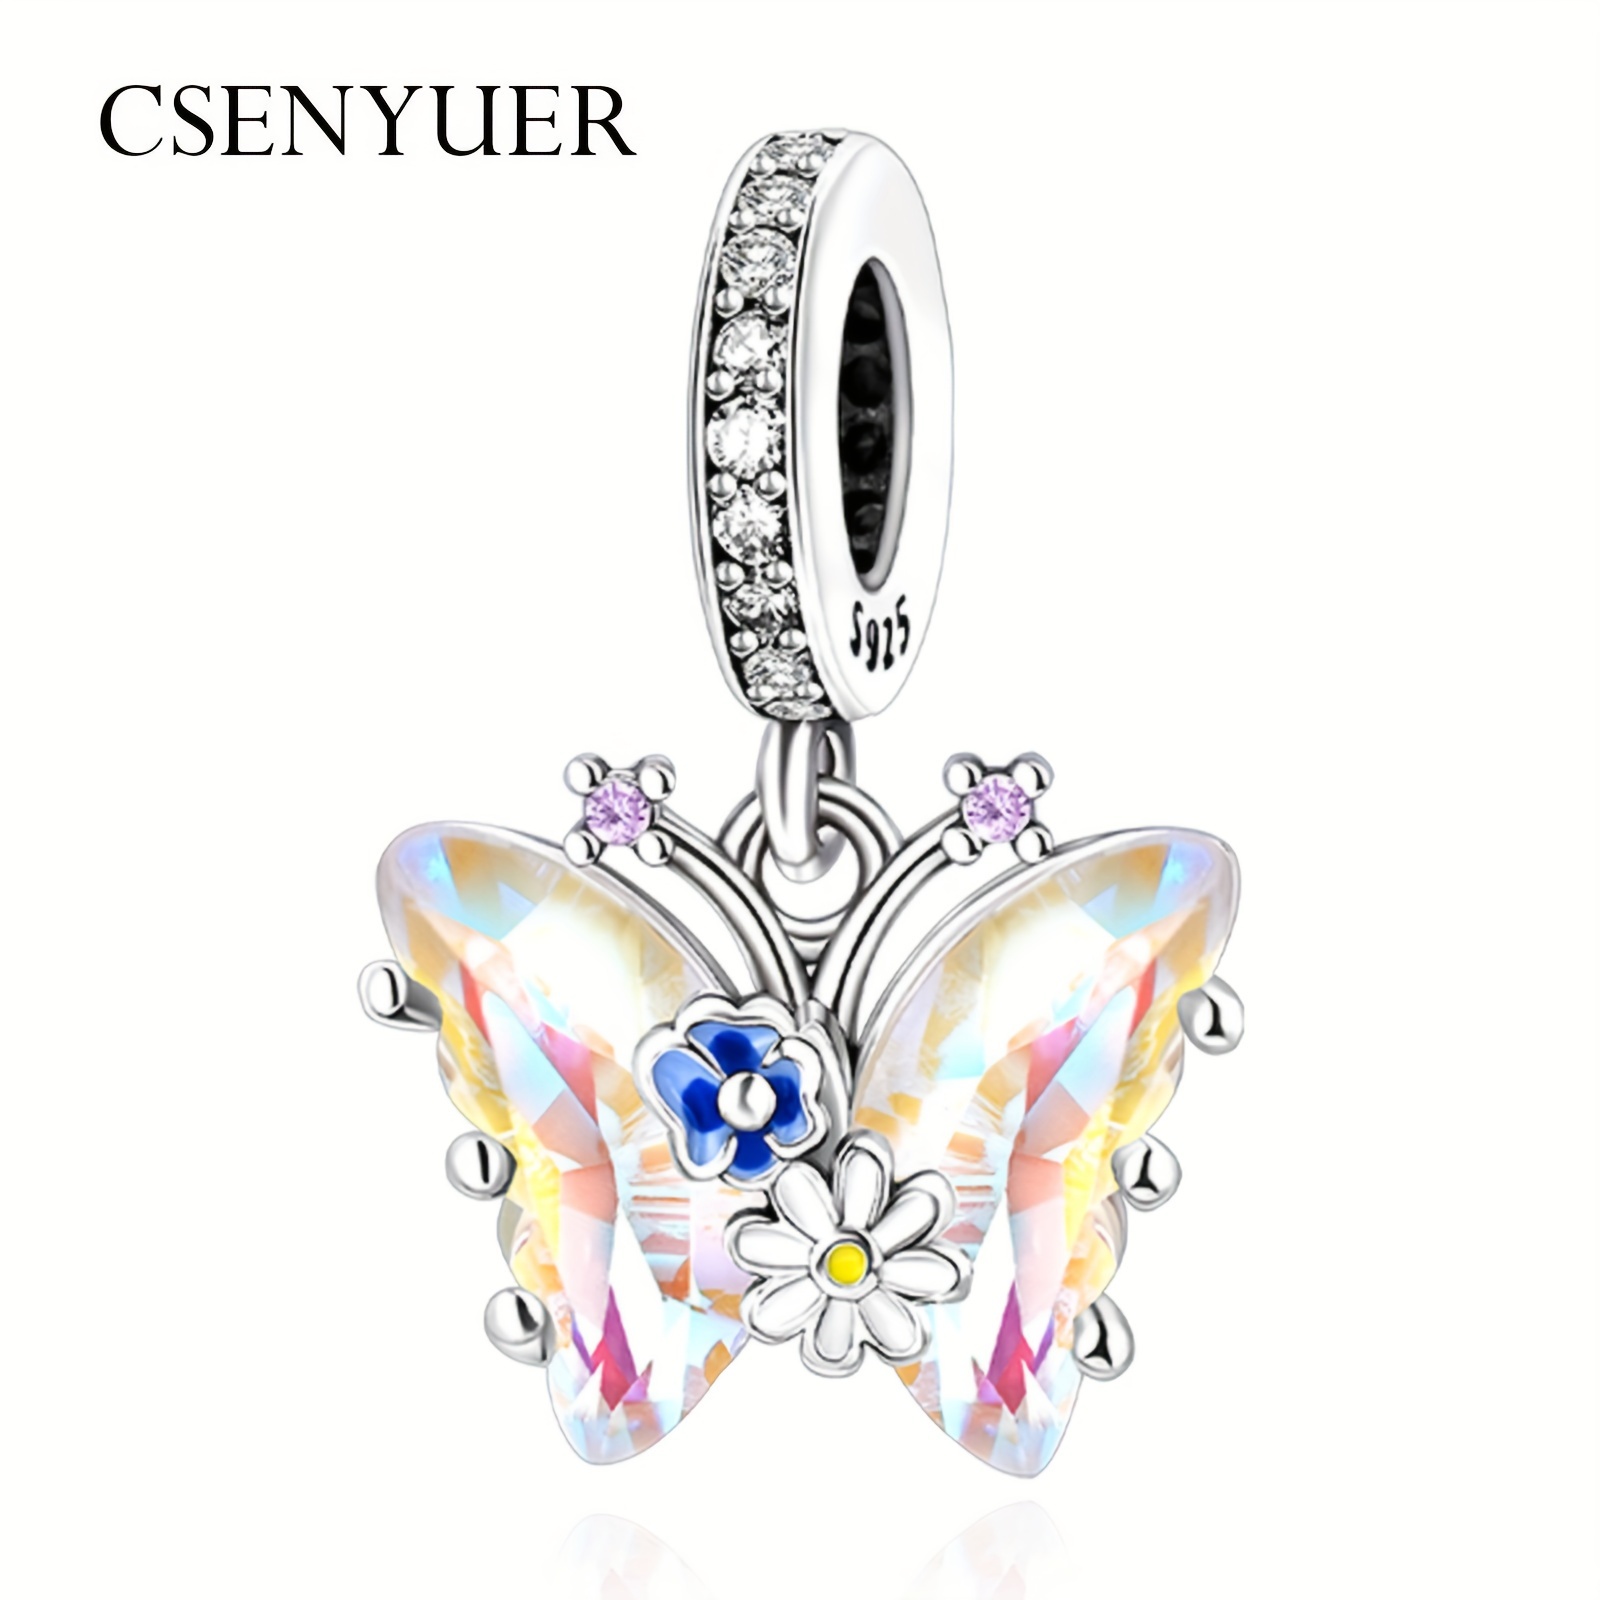 

Original For Bracelet Necklace Phantom Butterfly Dangle Charm Fits European Charm Bracelet Women 925 Sterling Silver Pendant Bead Jewelry